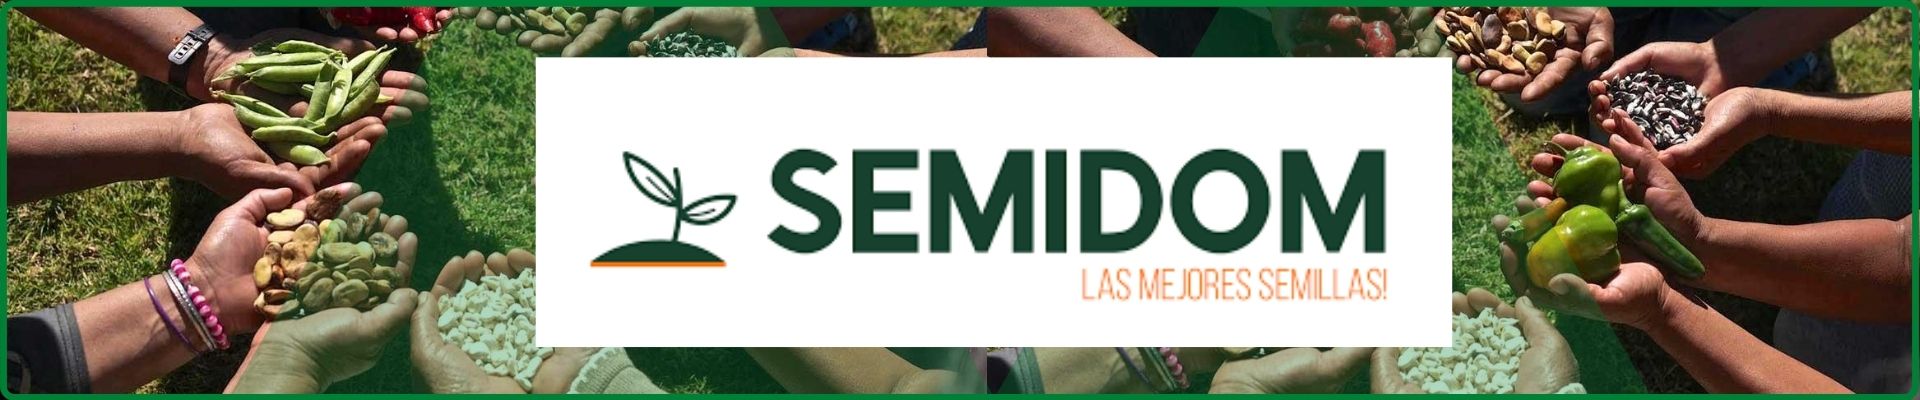 Semidom agroshow banner